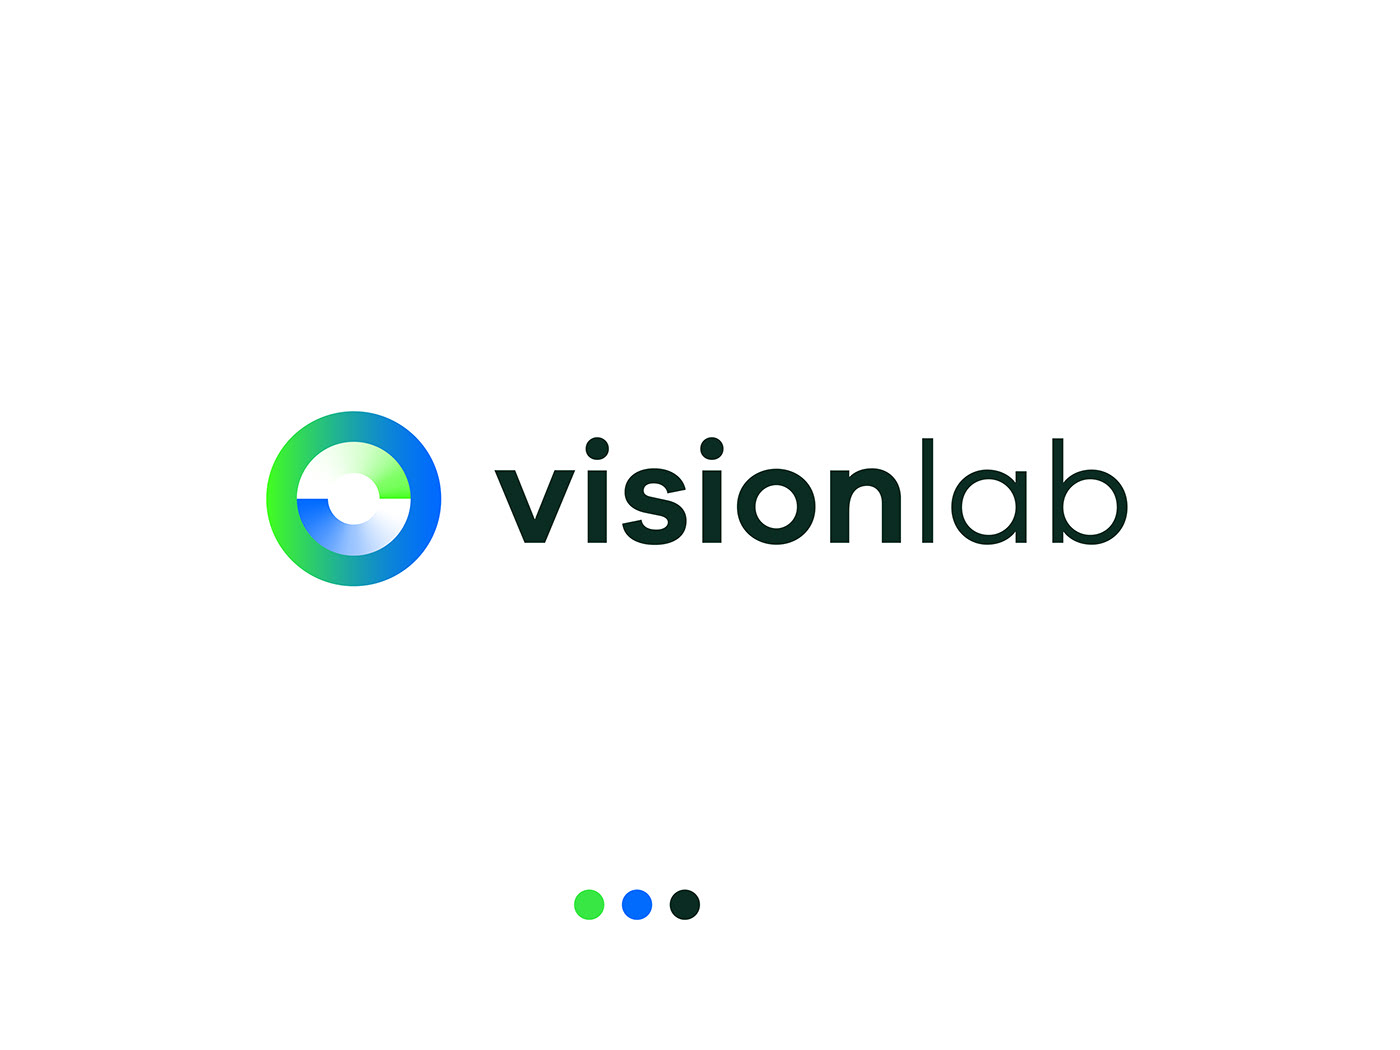 vision,lab logo,software logo,branding,3d,virtual  reality logo,brand identity,modern logo,logo desi